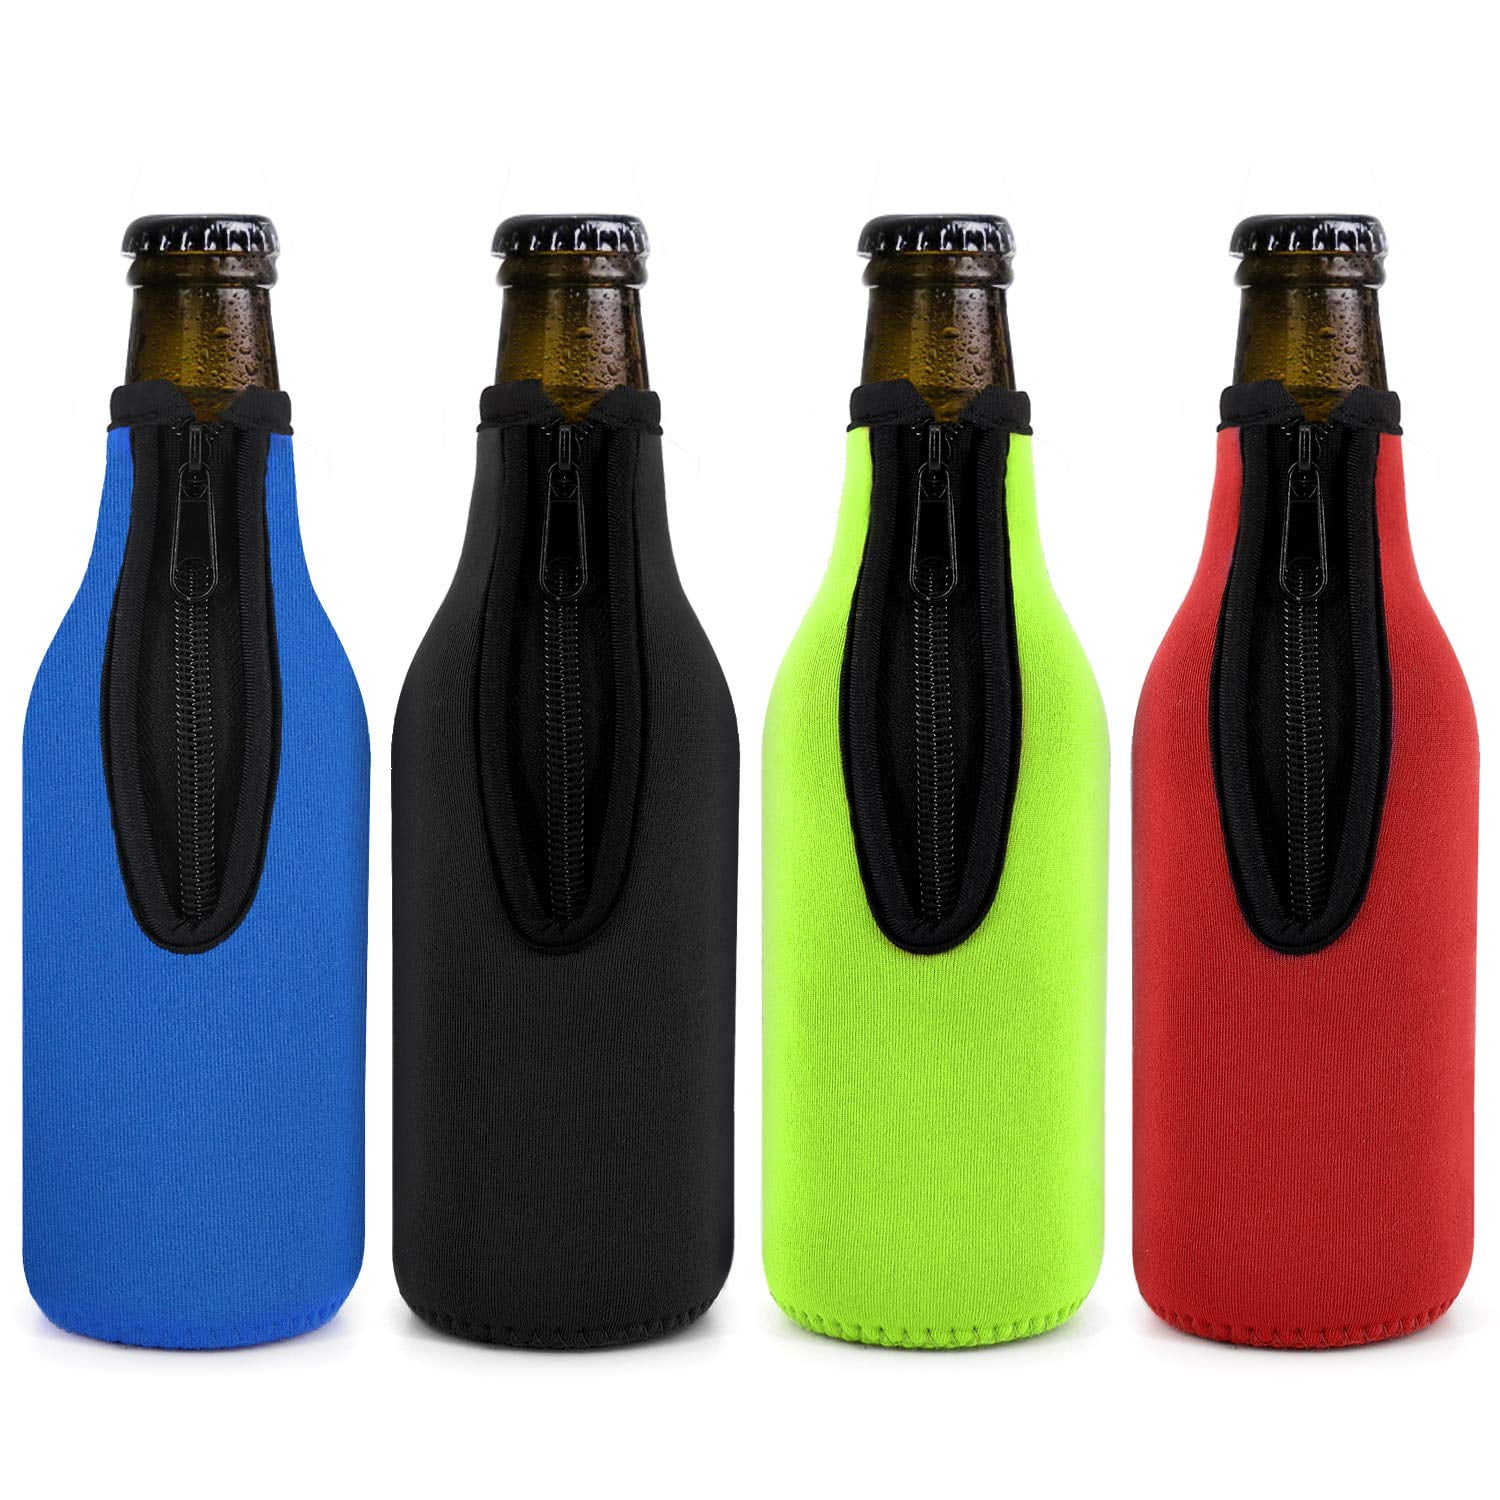 Beer Bottle Coozie Holder - Apex Insulated Steel Beer Holder for Bottles and Cans - Home Wet Bar